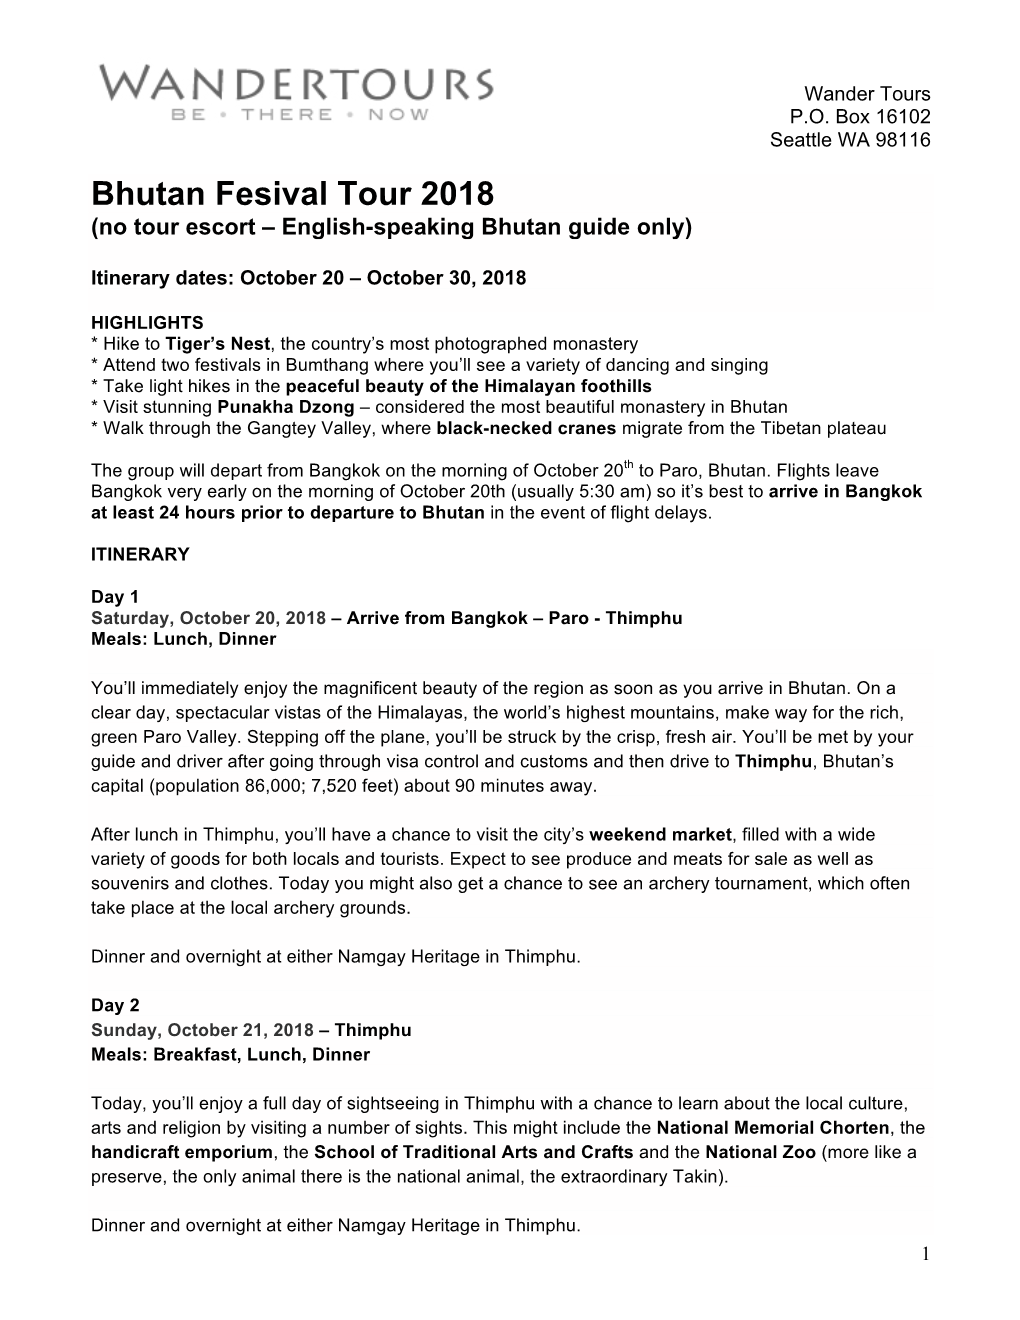 Bhutan Fesival Tour 2018 (No Tour Escort – English-Speaking Bhutan Guide Only)